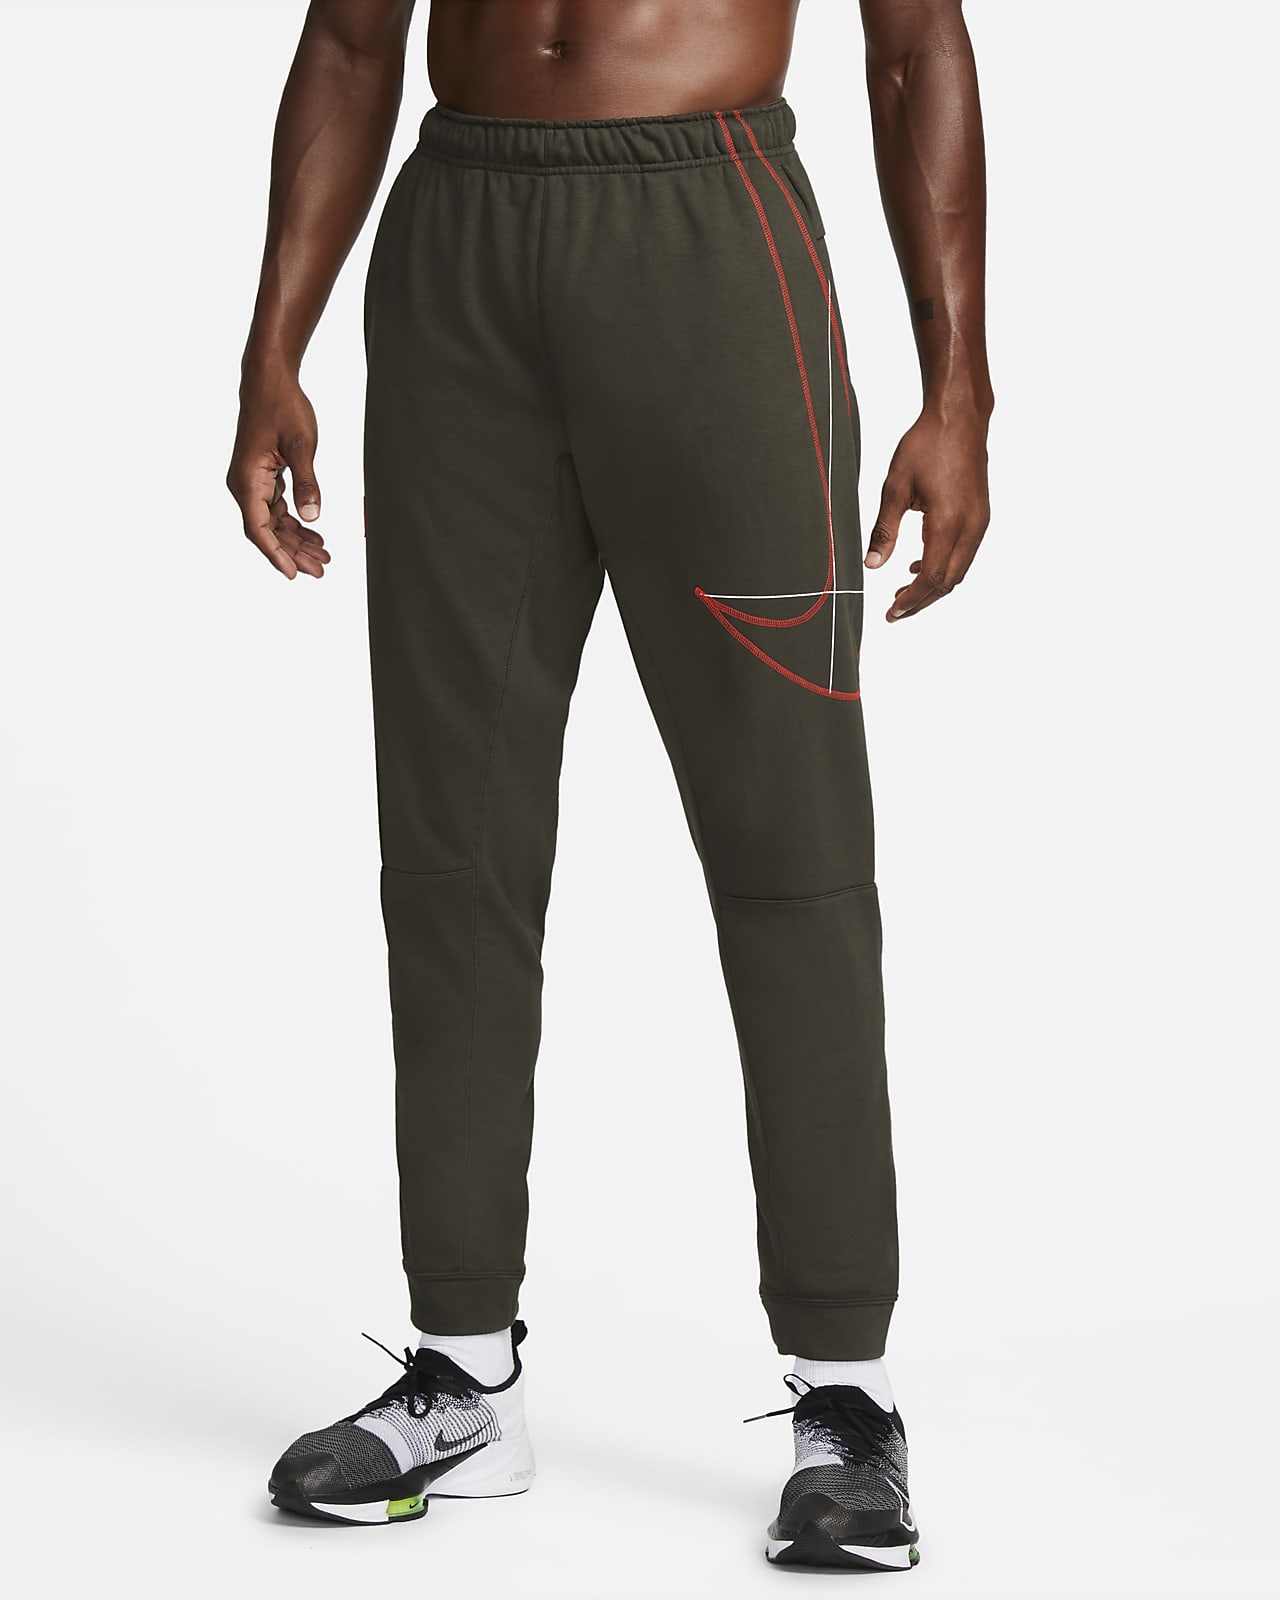 Nike Dri-FIT Men's Fleece Tapered Running Pants